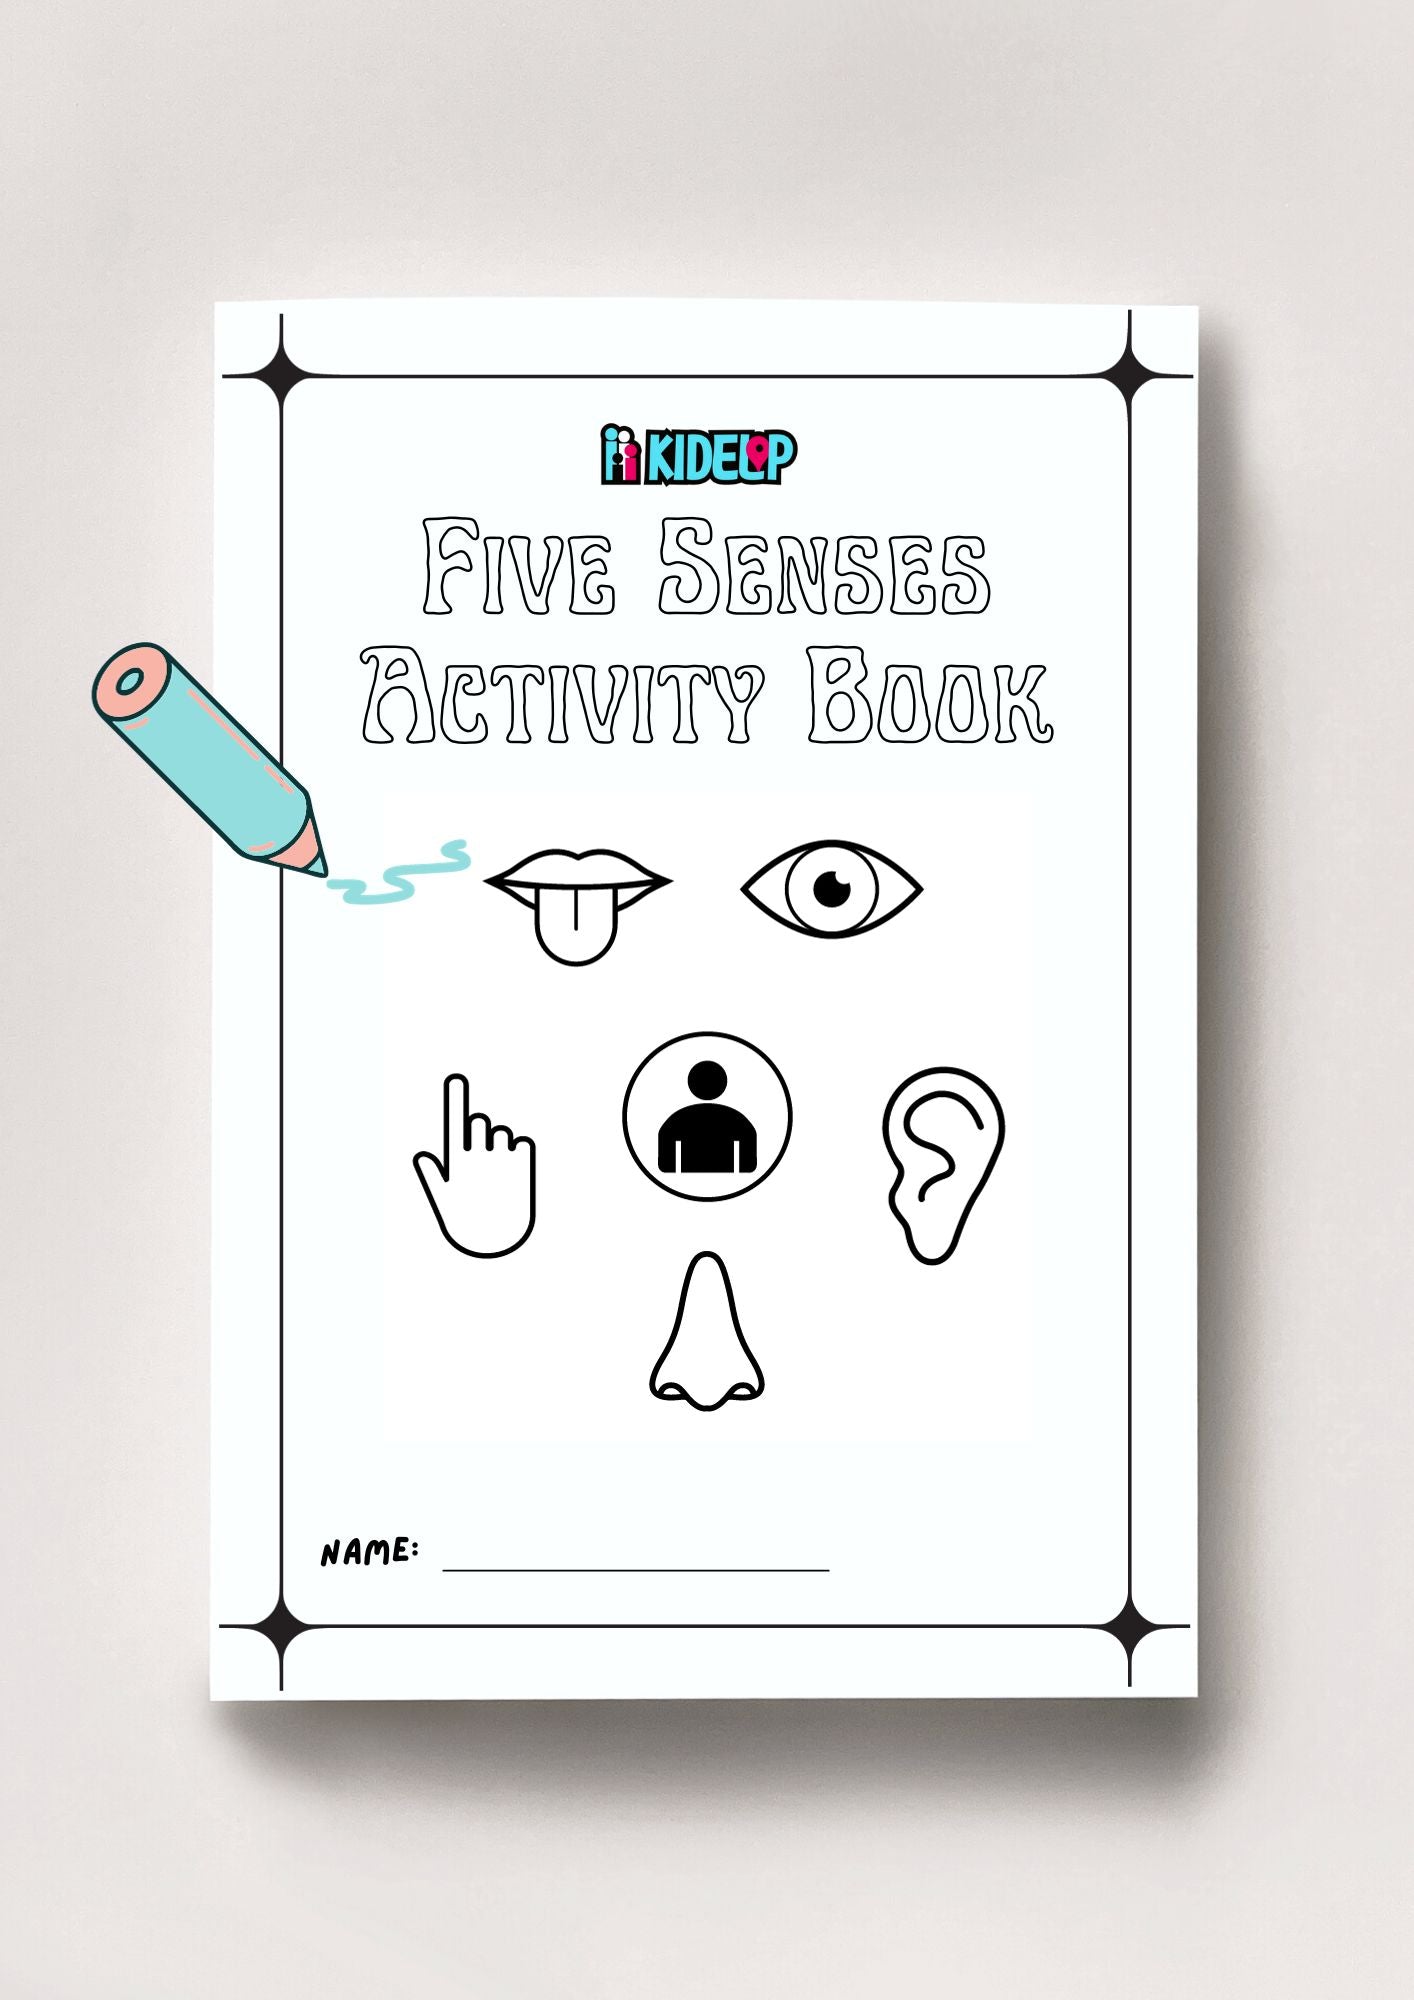 5 SENSES Activity Book for kids! - kidelp